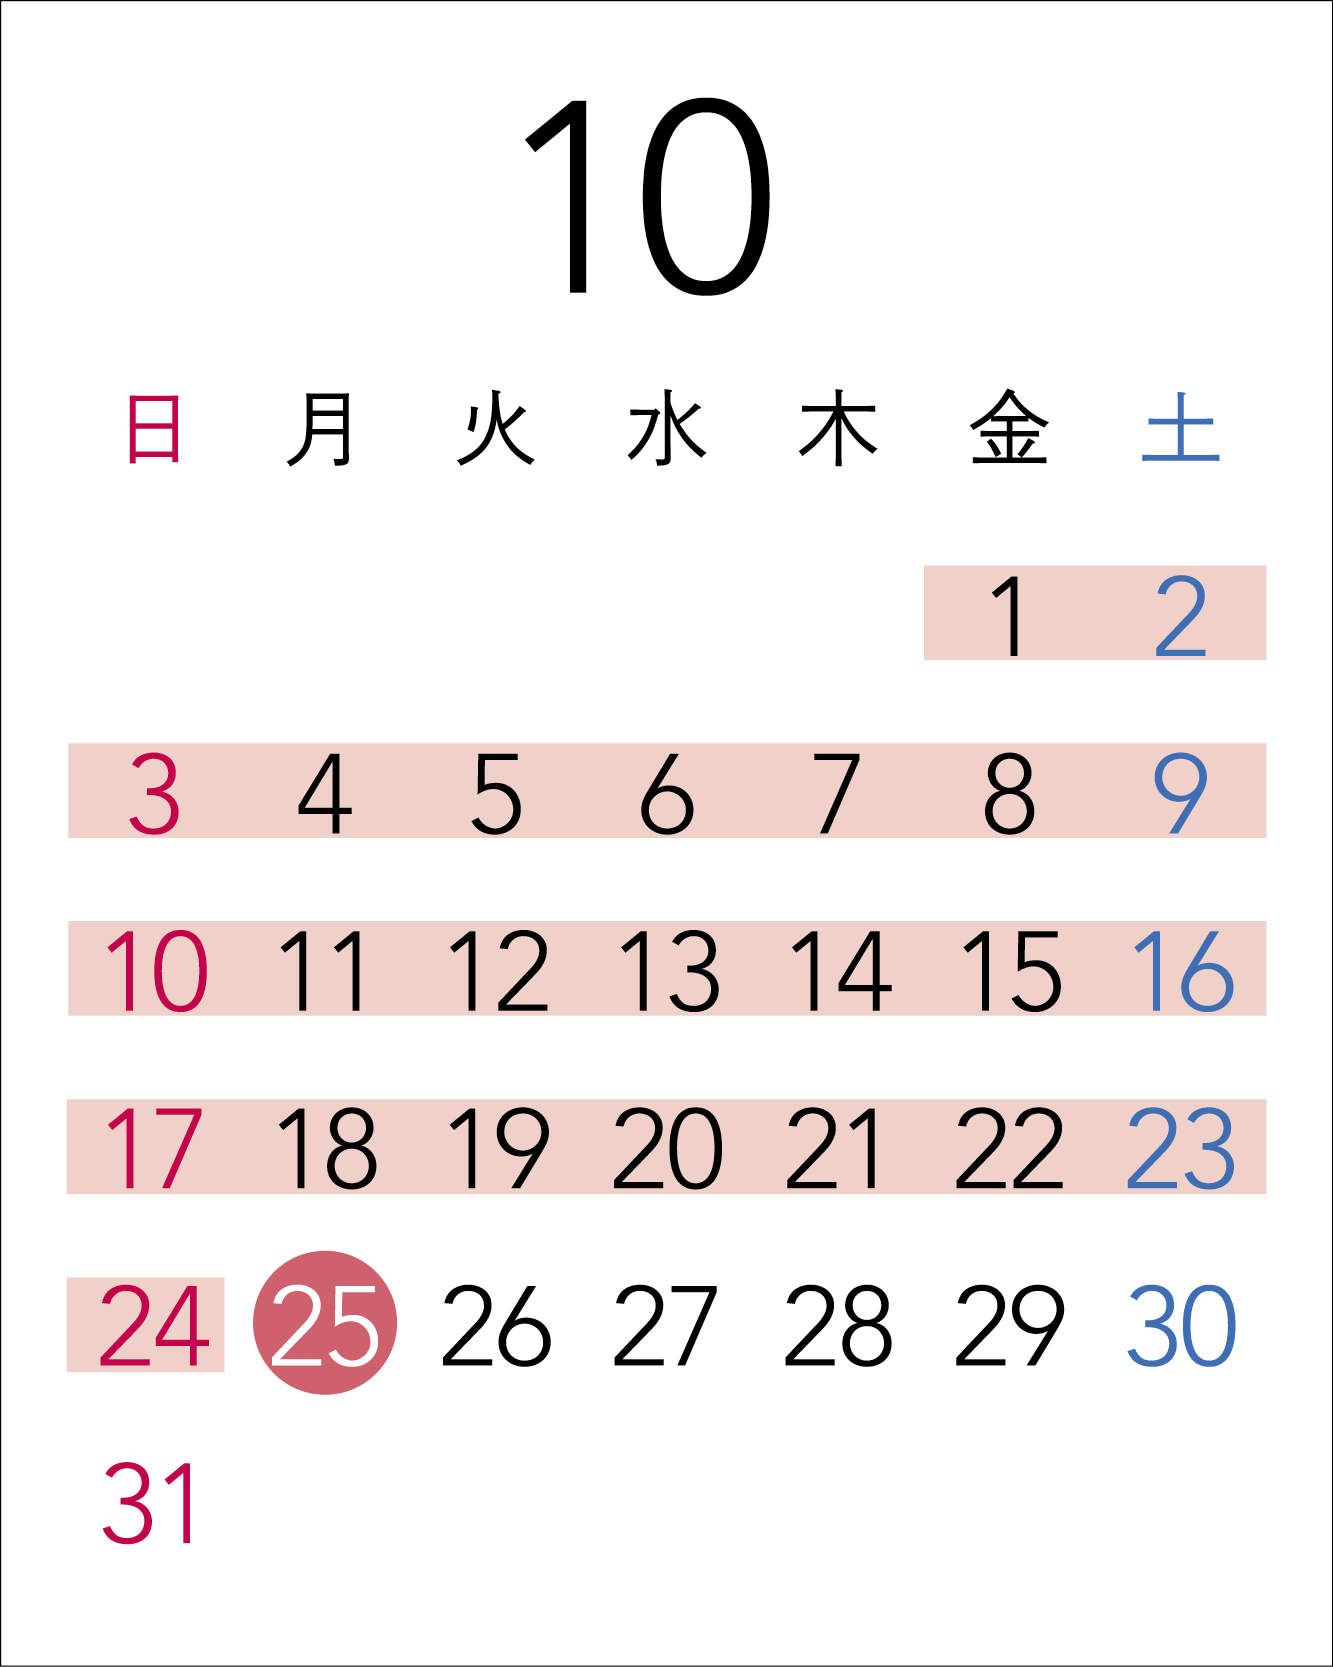 Calendar in October